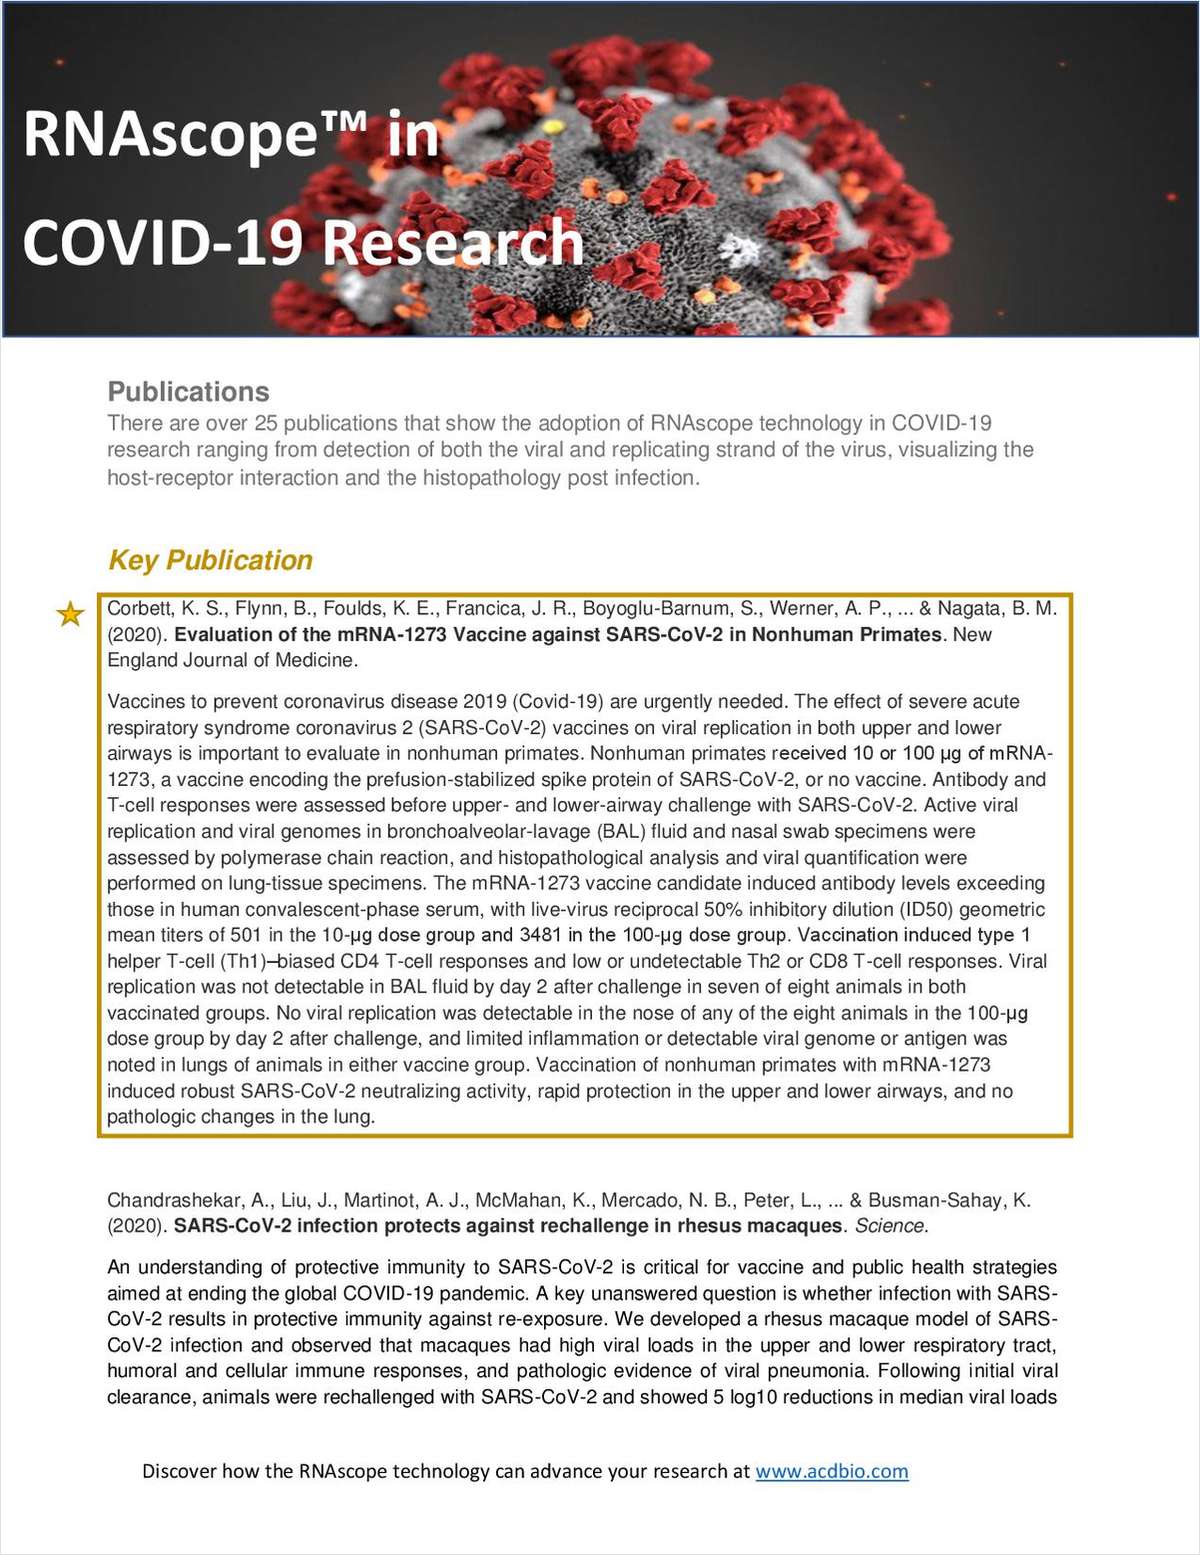 RNAscope in COVID-19 Research